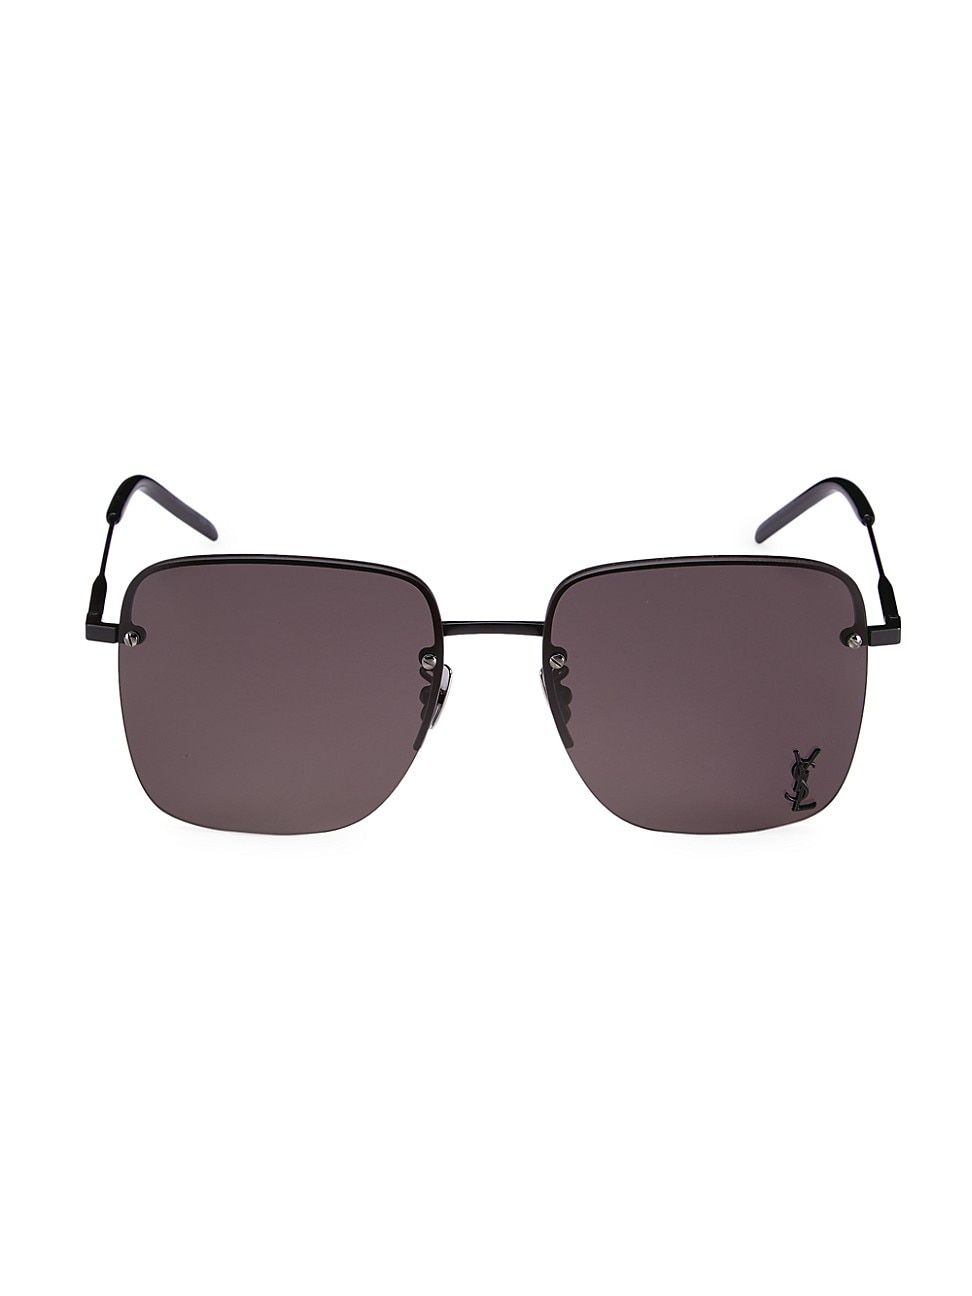 Saint Laurent Women's Monogram 58MM Square Sunglasses - Black | Saks Fifth Avenue